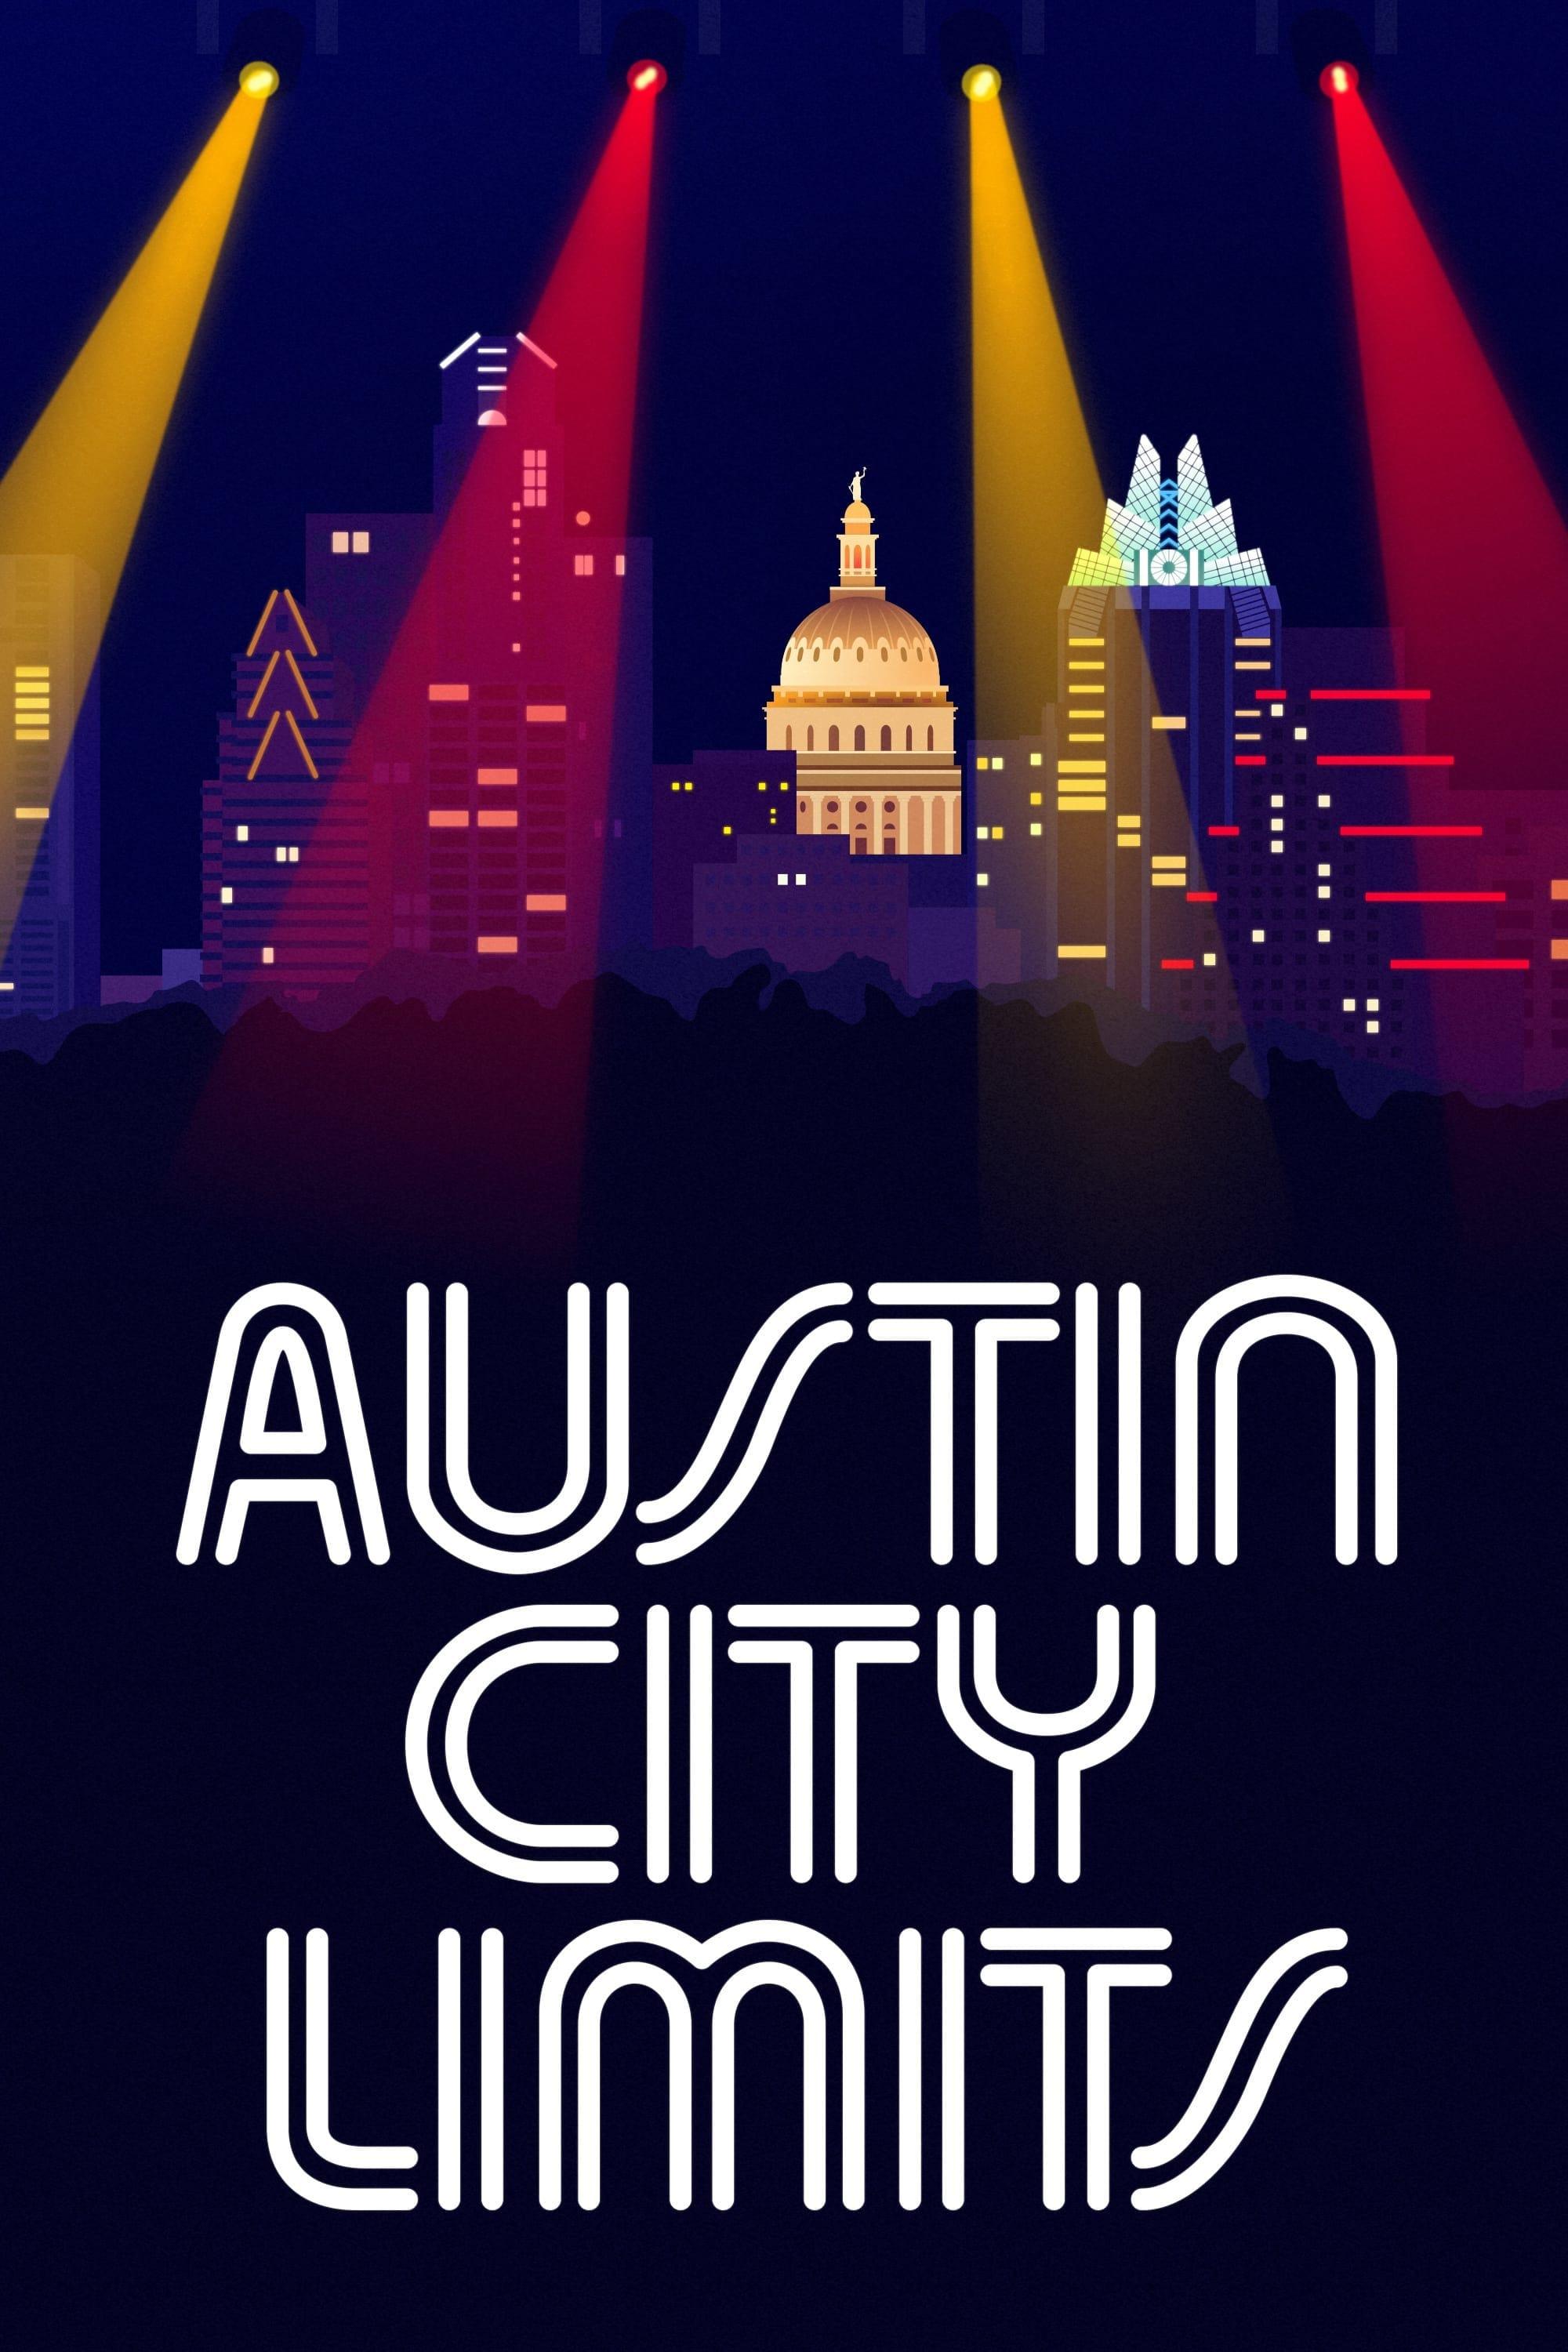 Austin City Limits poster